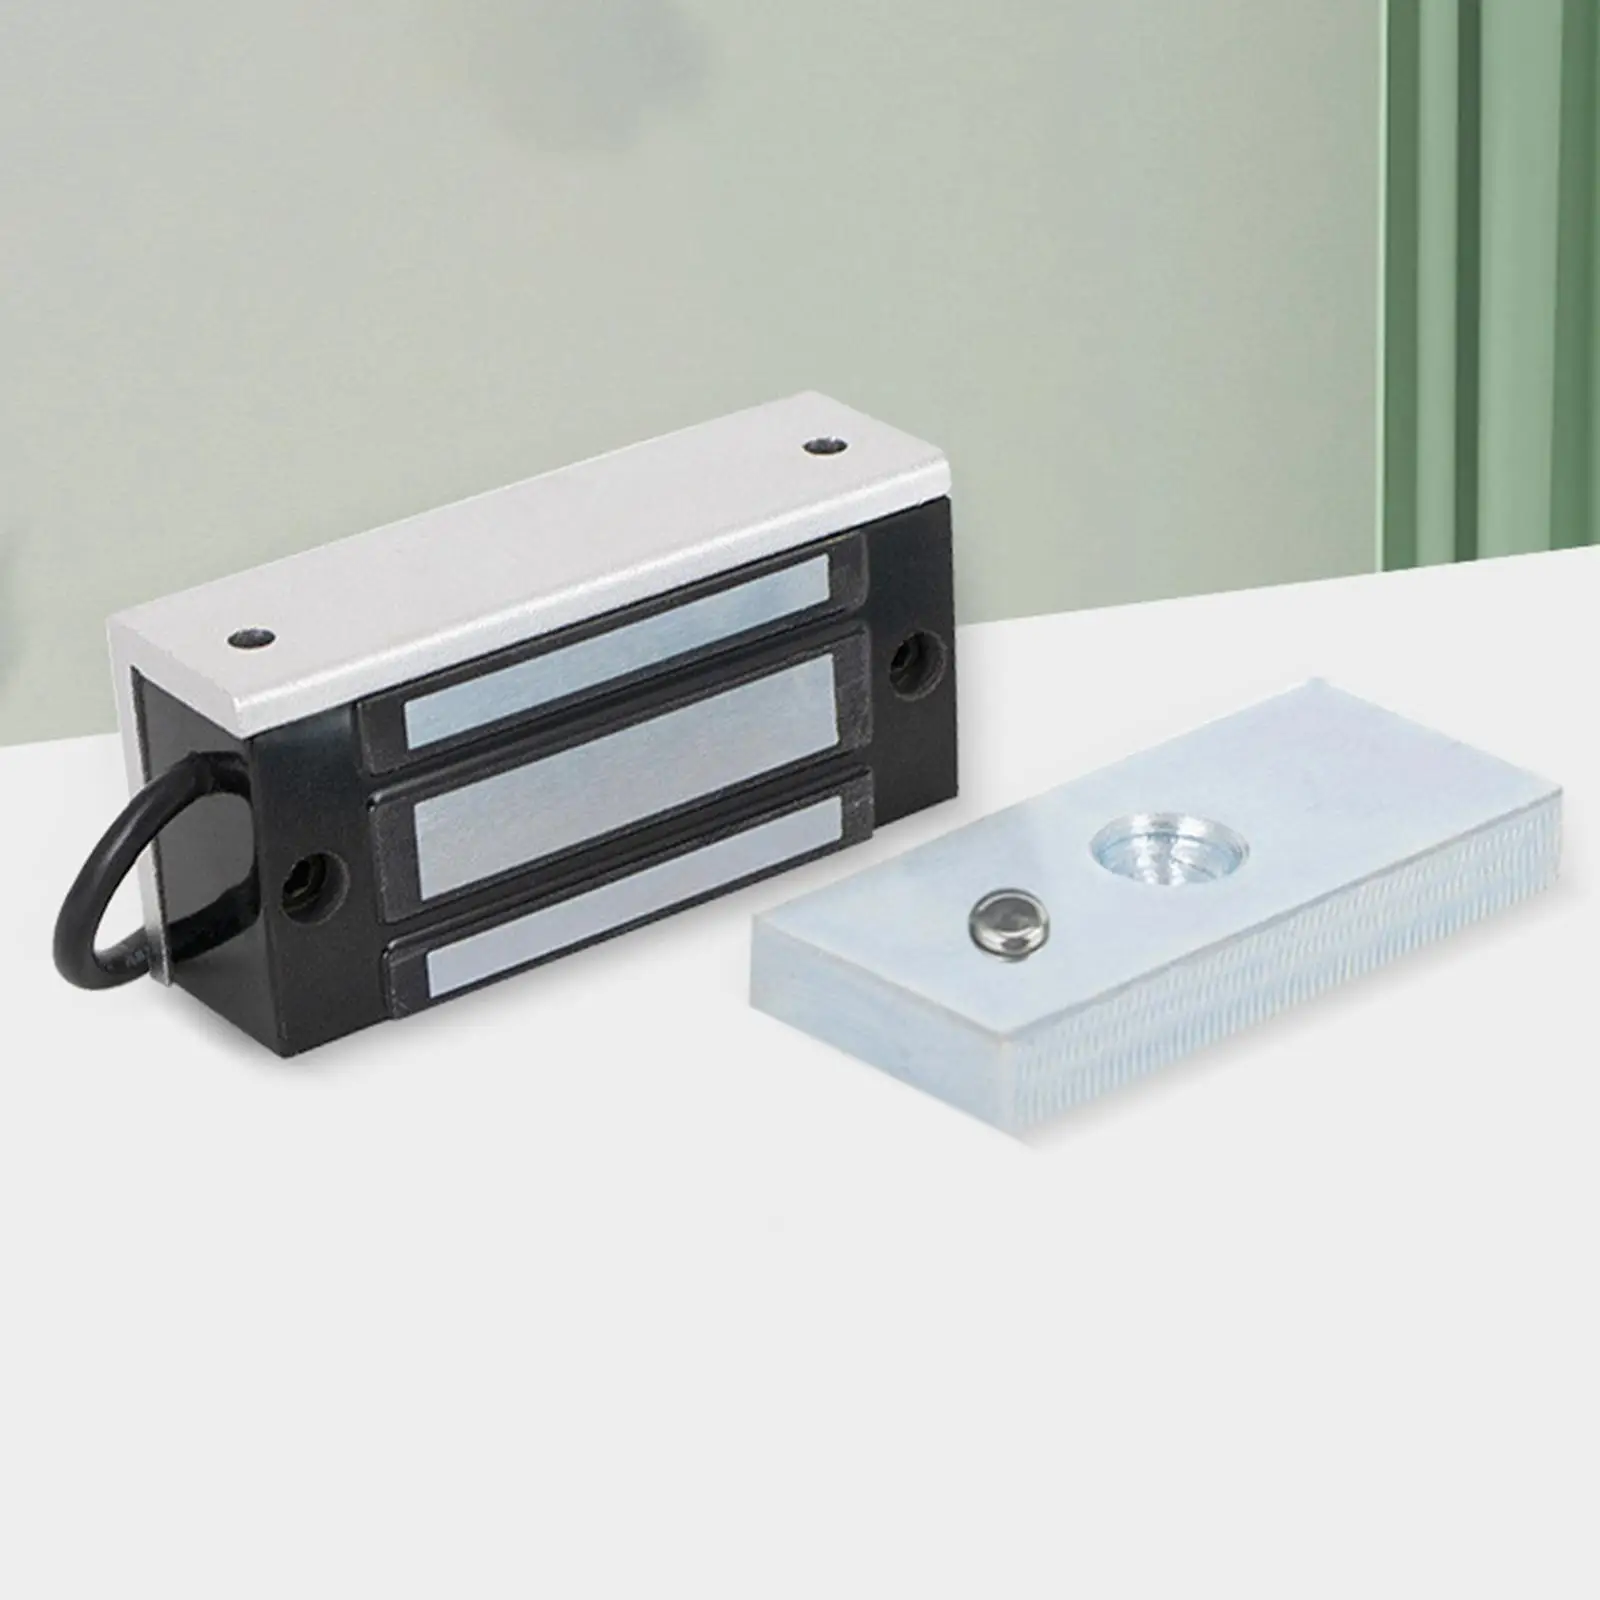 12V Electromagnetic Lock Mini Em Locks Electric Magnetic Lock for Cabinet Wooden Door Drawer Home Security System Glass Door